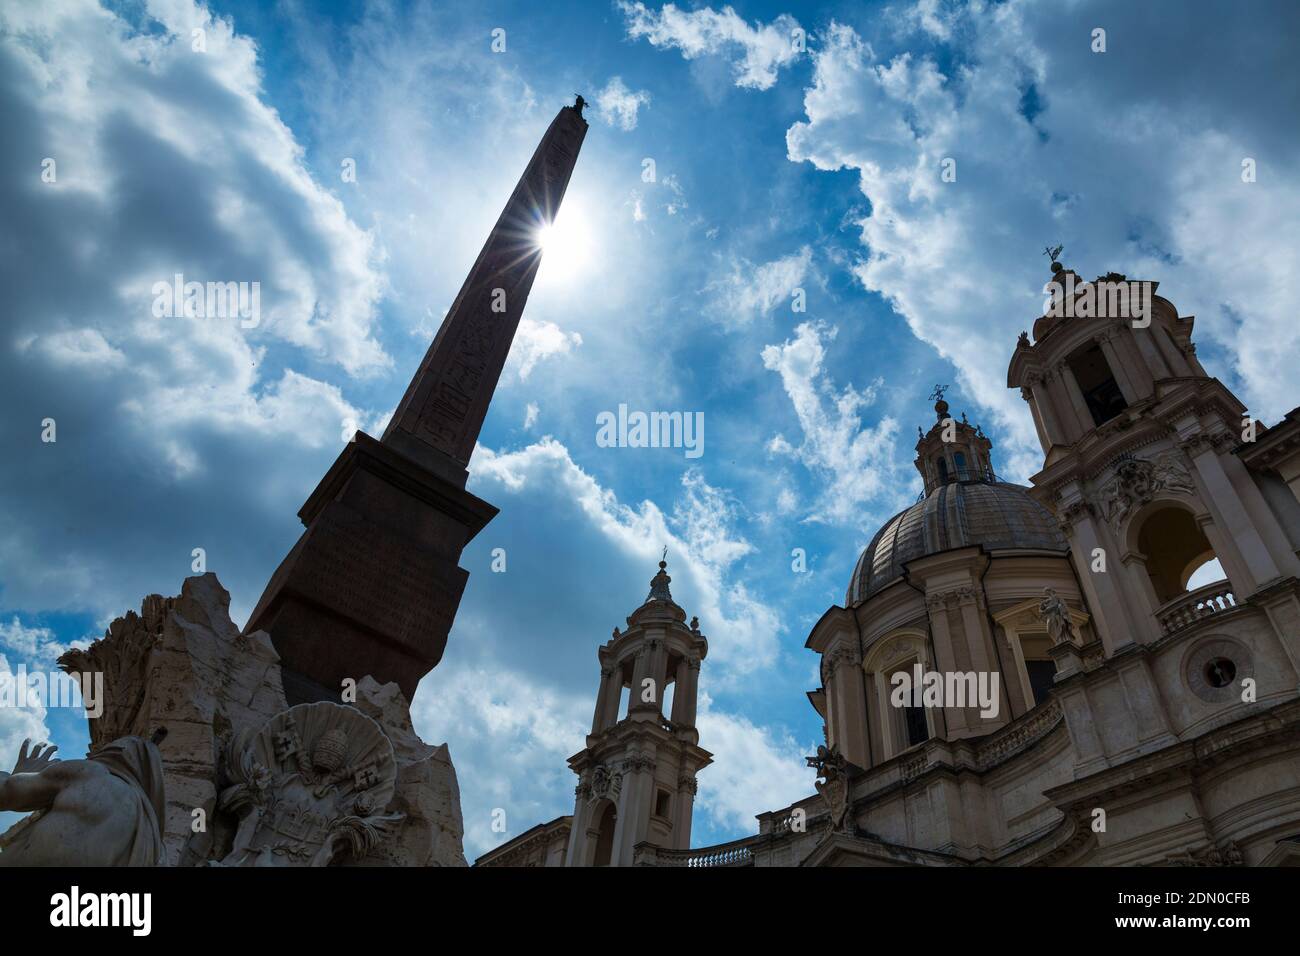 Piazza Navona, Rome, Italy, Europe Stock Photo